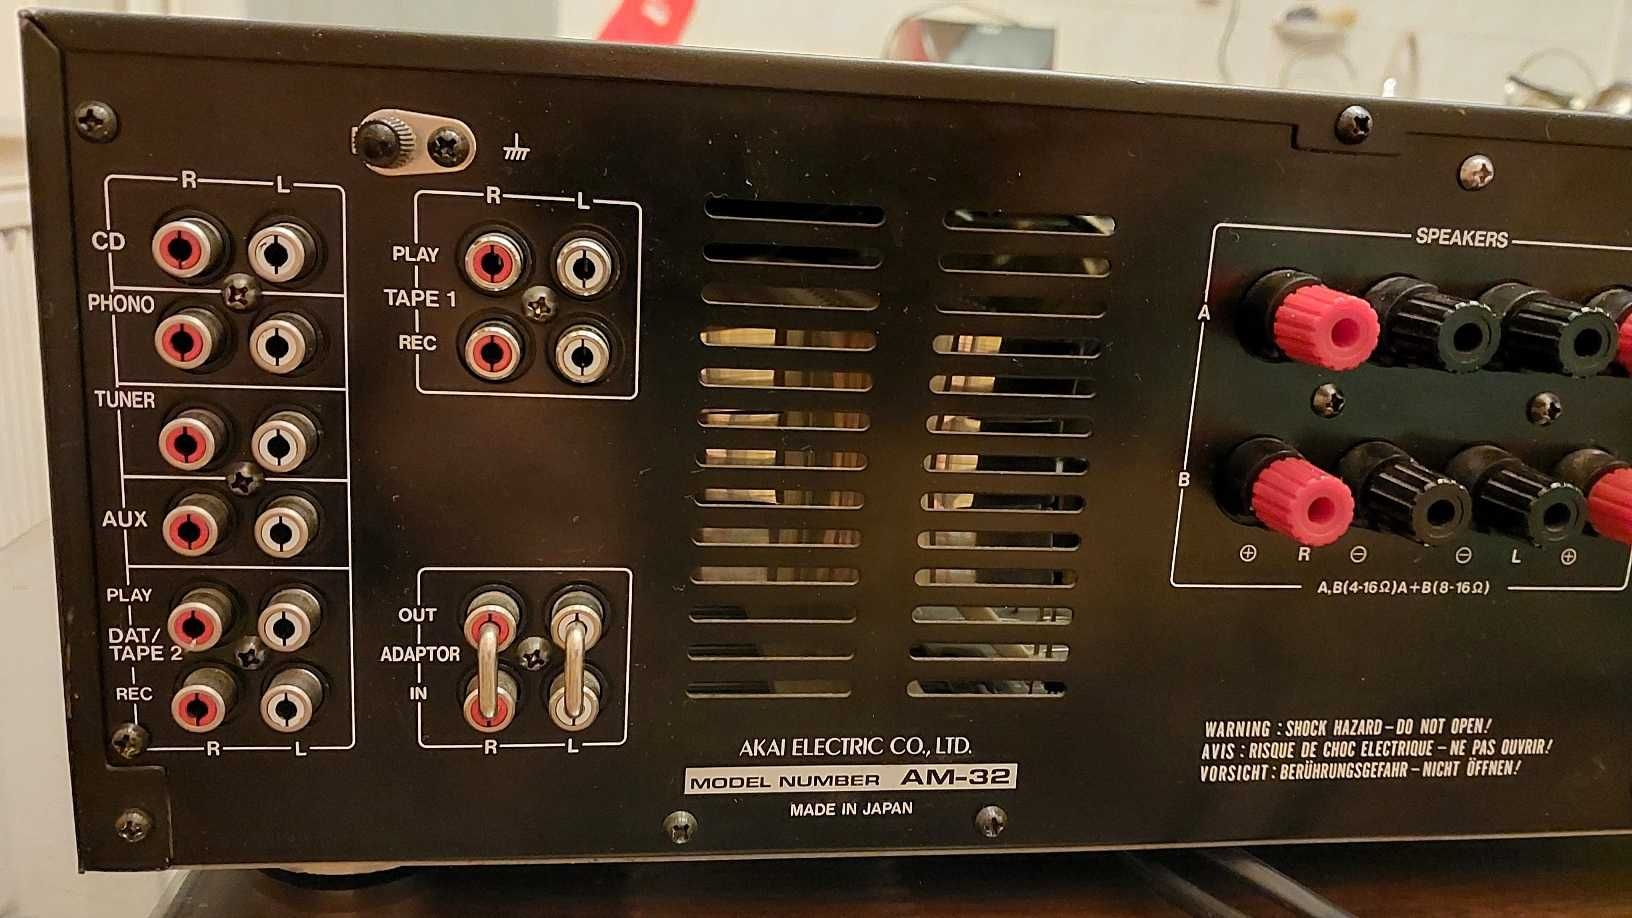 Amplificator AKAI AM-32, negru